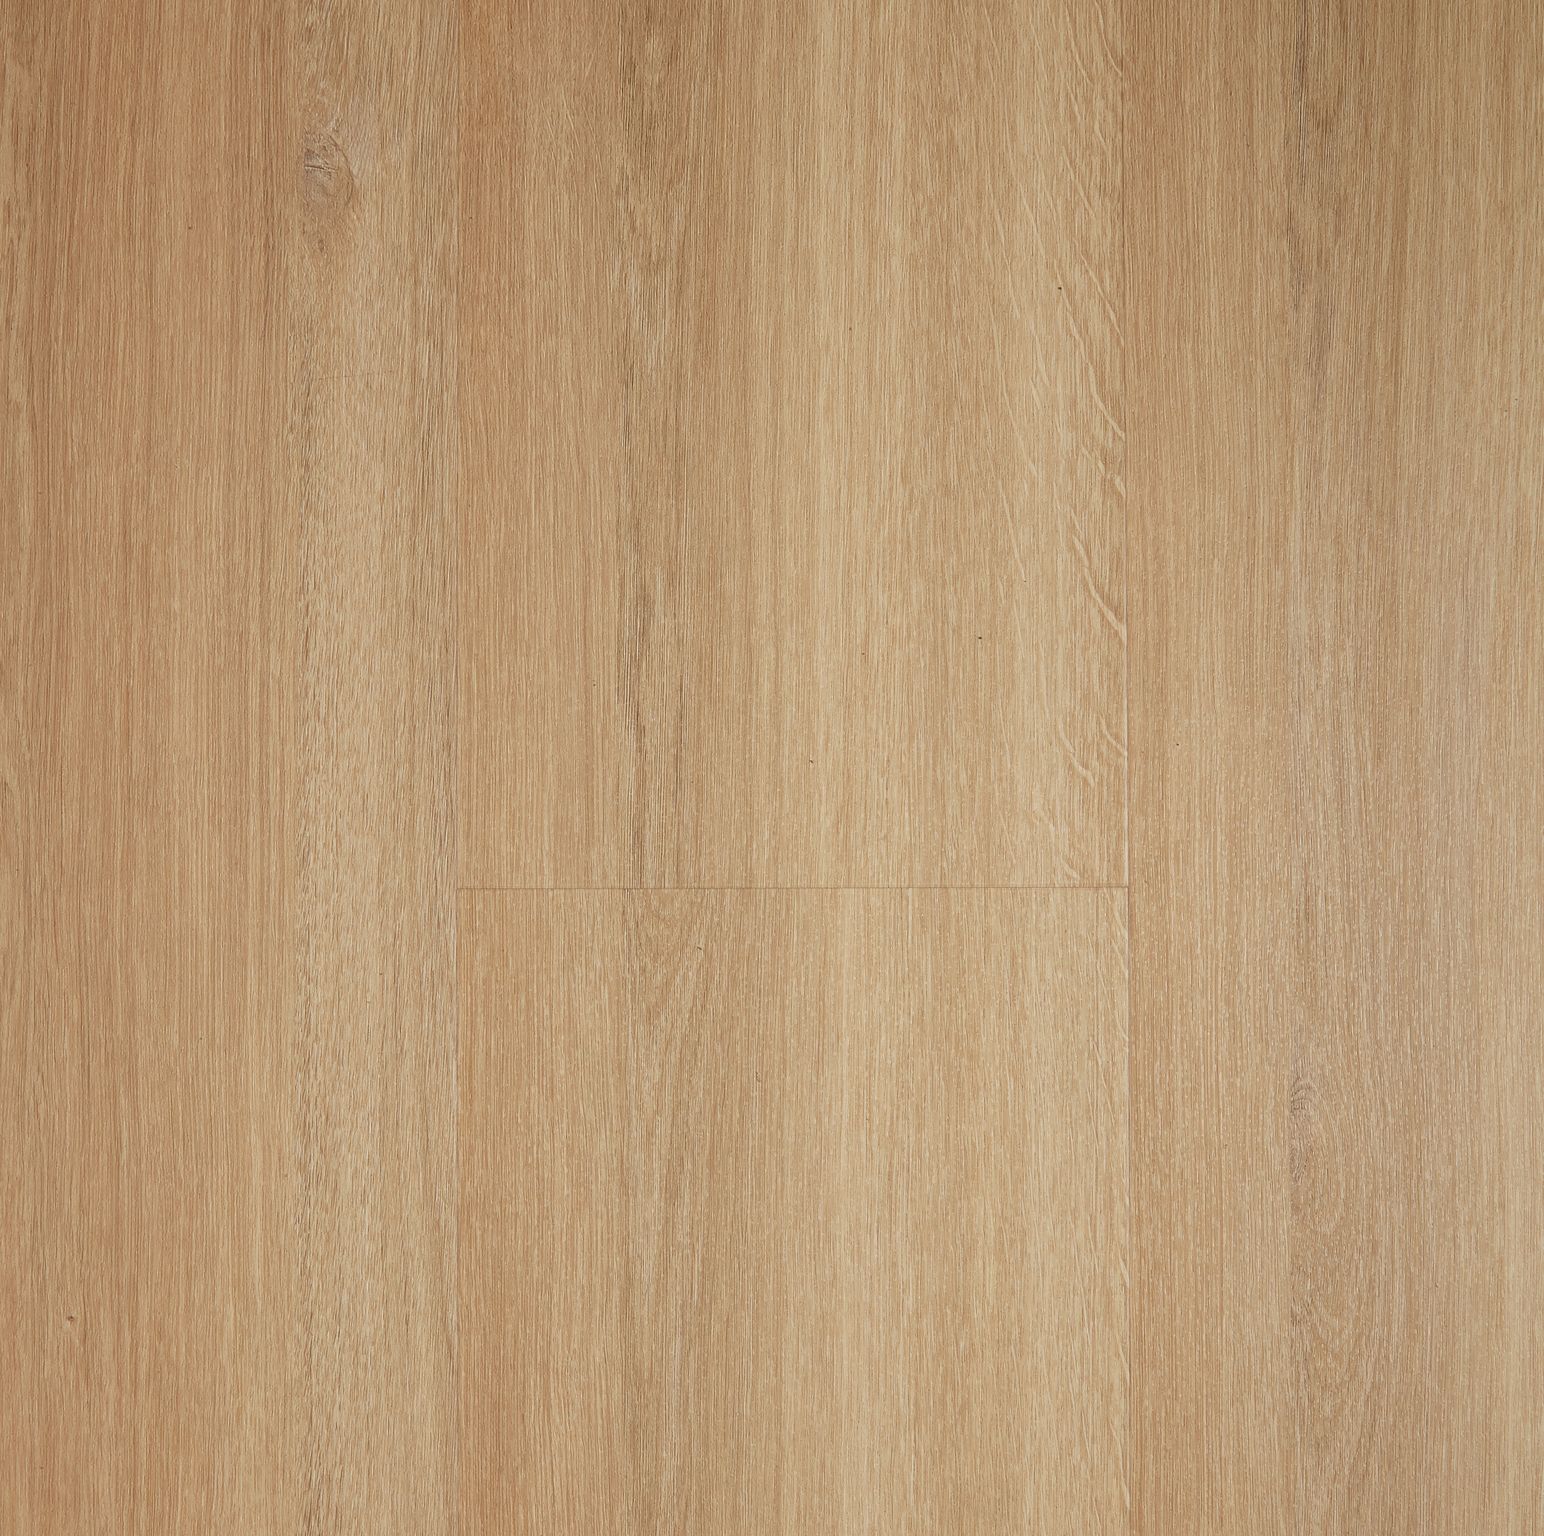 Easi Plank Wheat Hybrid Flooring 1520mm X 228mm X 6 5mm 2 08m2 Per Pack Flooring World